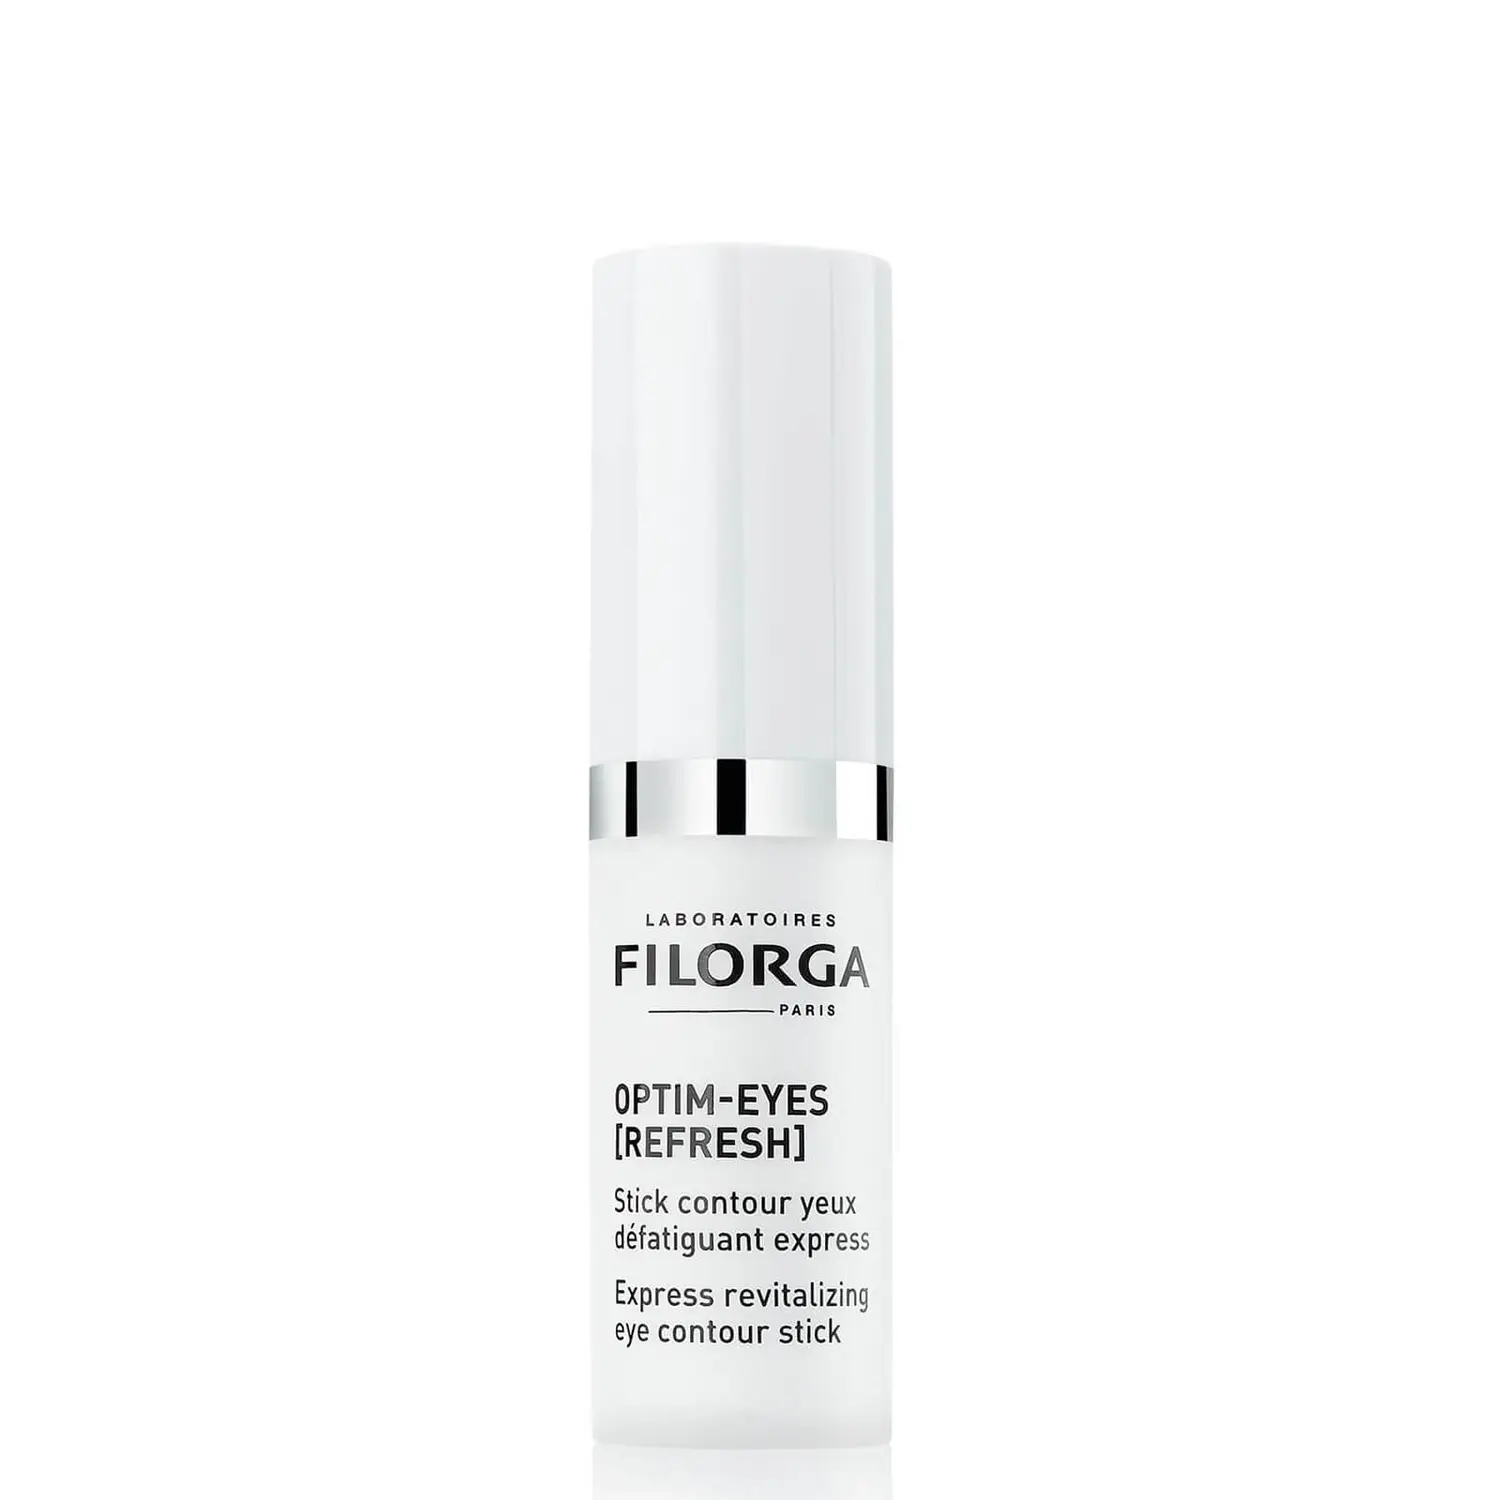 Filorga - Optim Eyes Refresh 12.5g, with spherical eyes refresher technology.